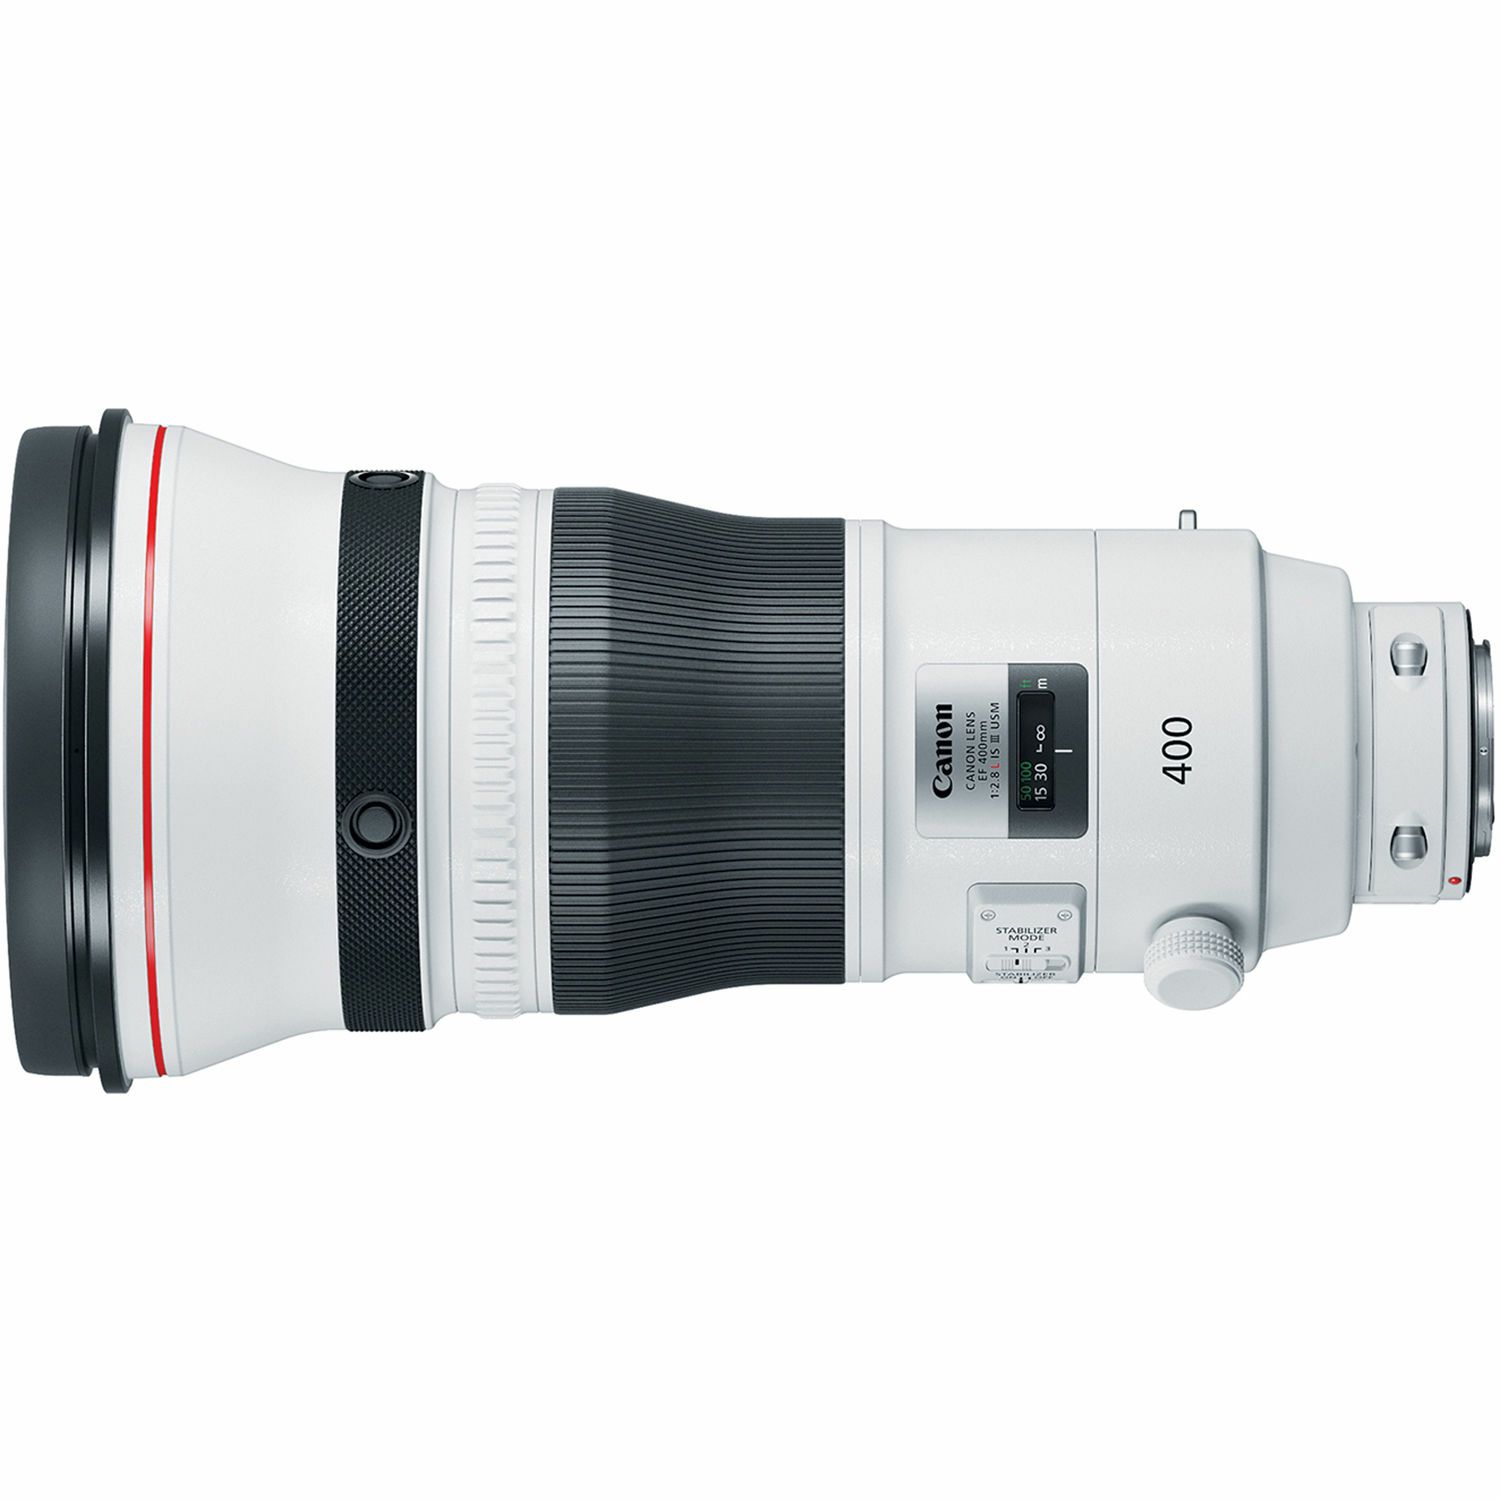 Canon EF 400mm f/2.8 L IS III USM telefoto objektiv fiksne žarišne duljine 400 F2.8 1:2,8 1:2,8L prime lens (3045C005AA)